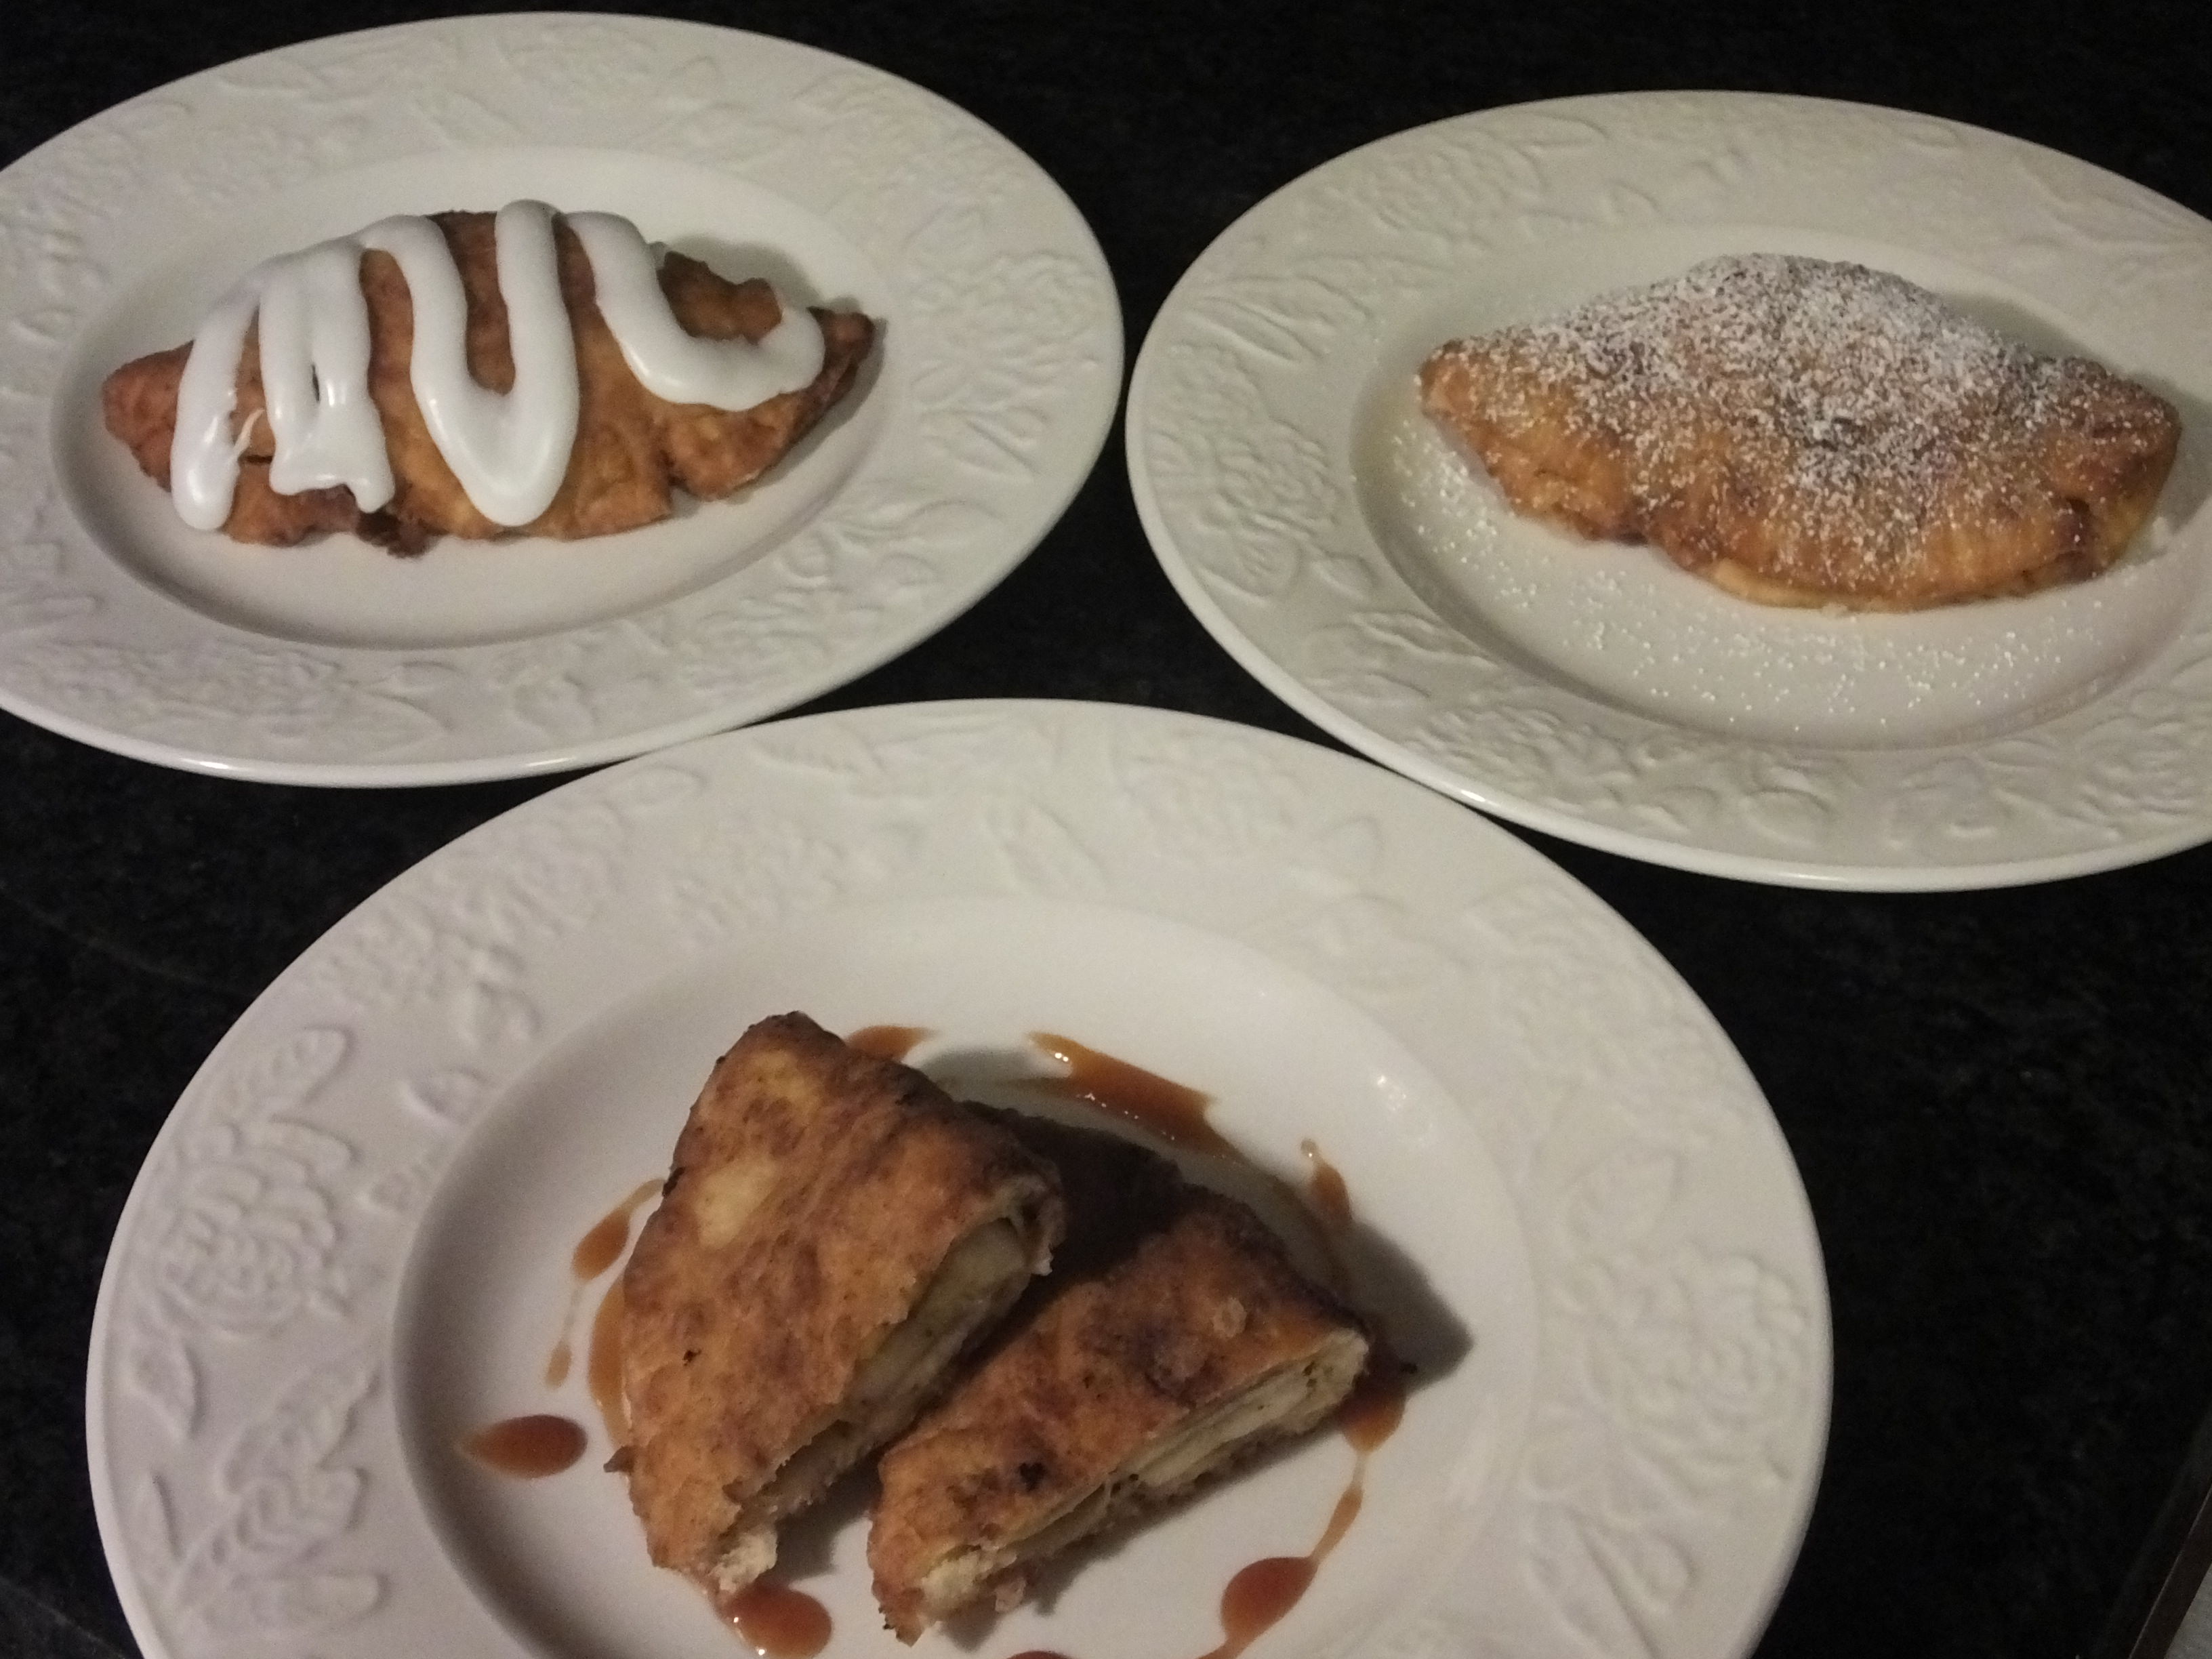 Two Fried Pies – Three Ways